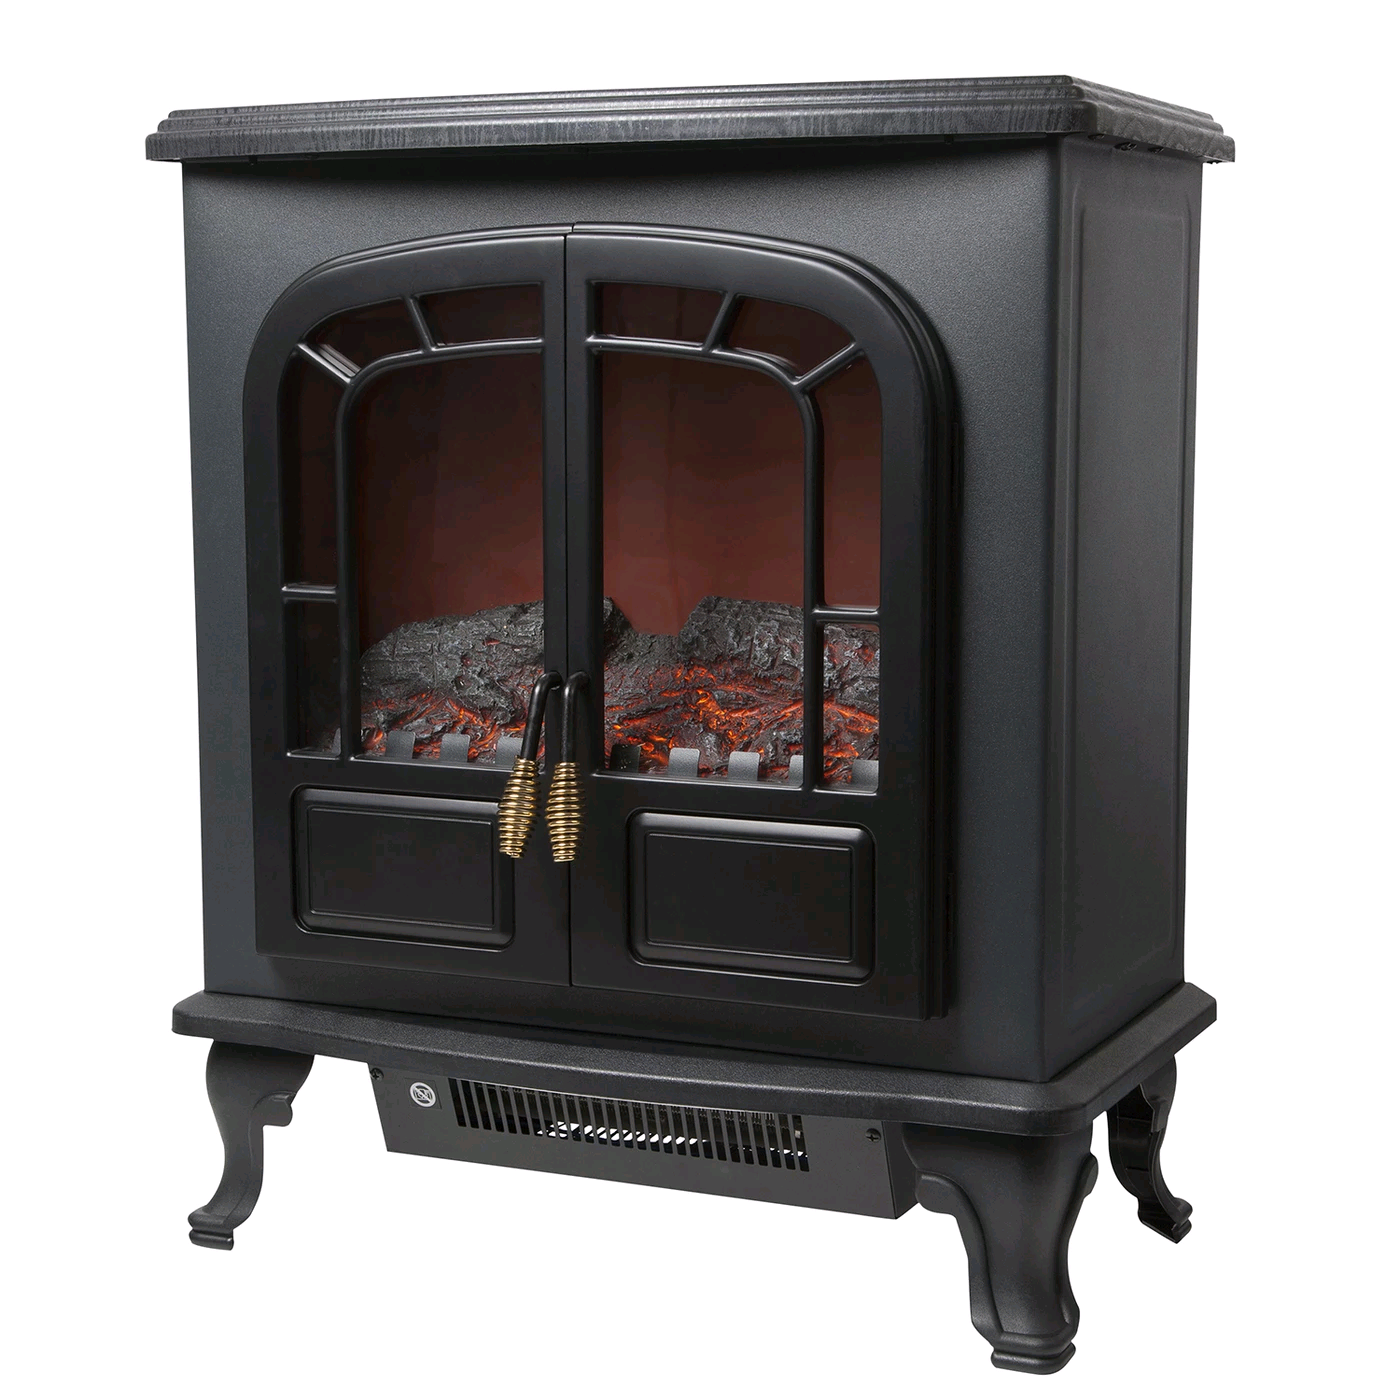 Warmlite Wingham Electric Fireplace 2kW Heater 